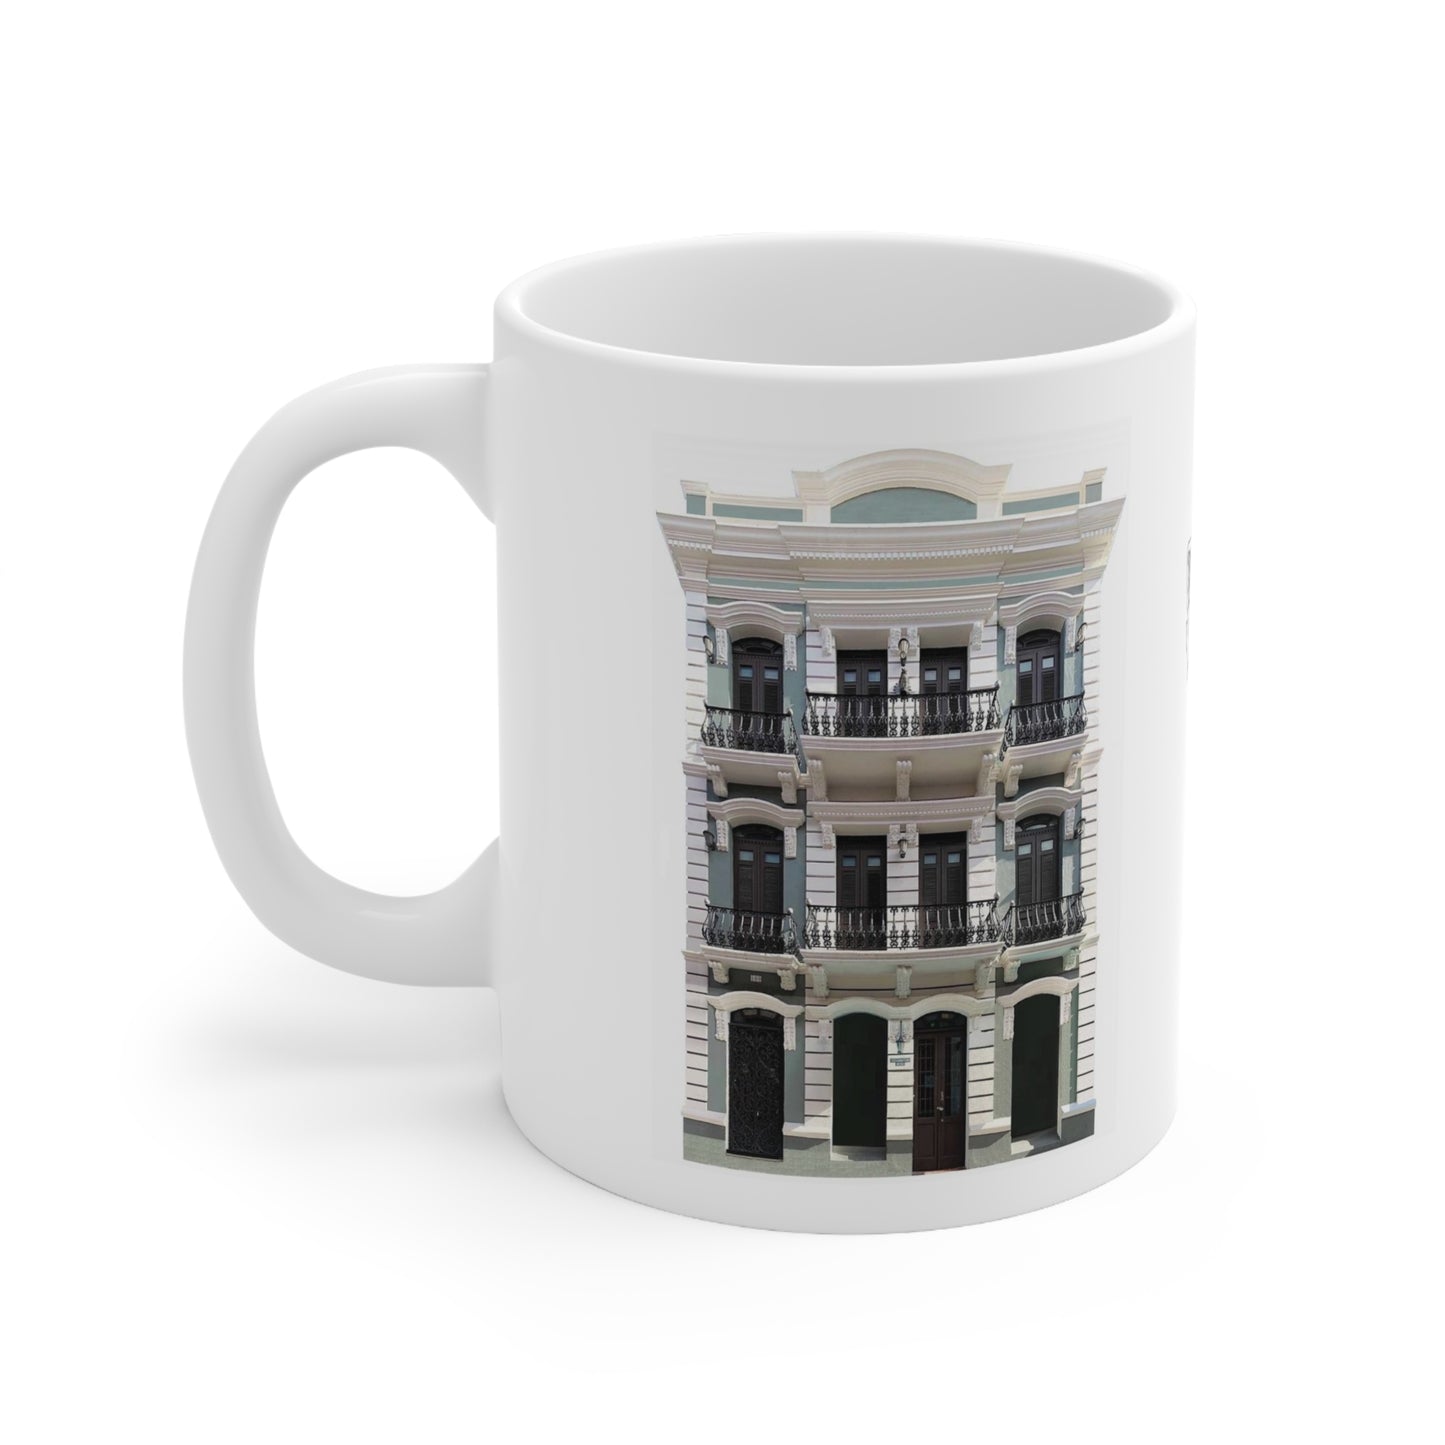 Cup / Fortaleza Street, 109